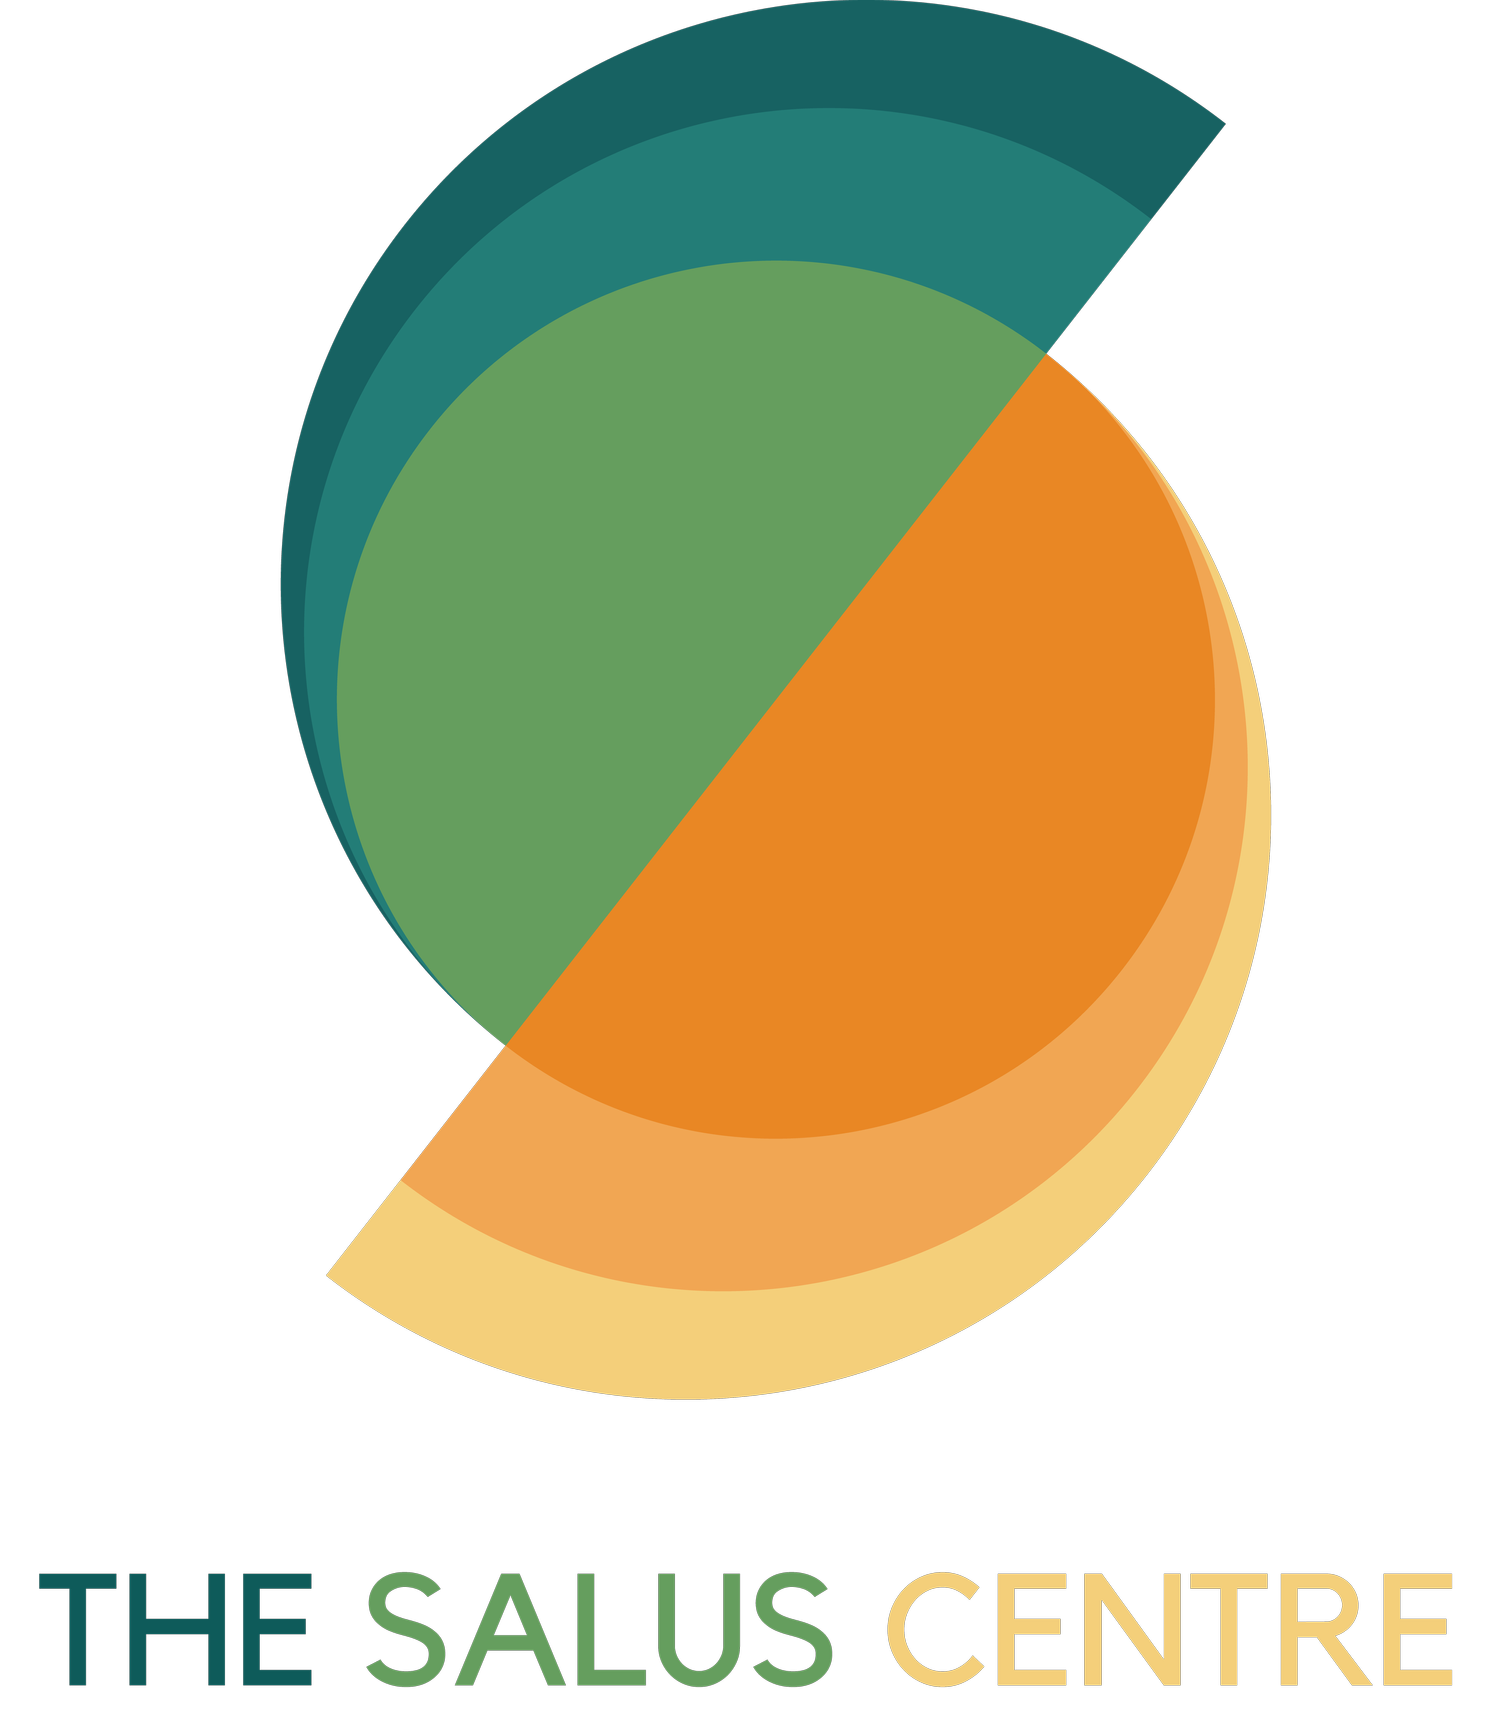 The Salus Centre